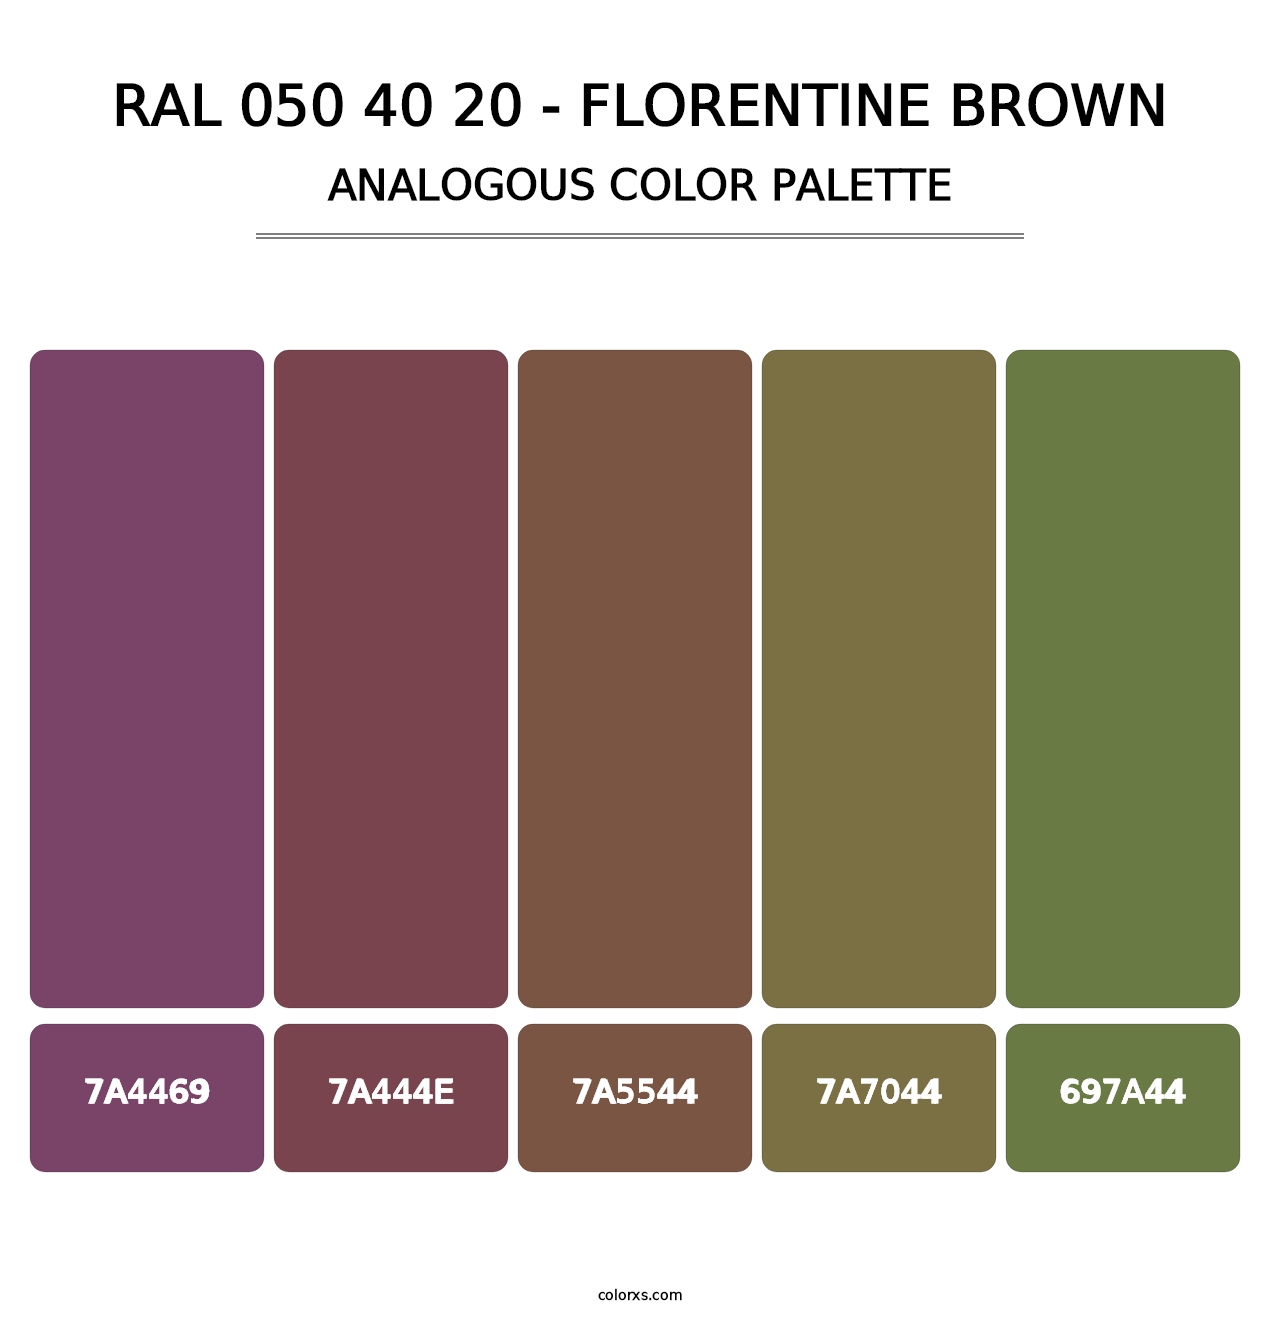 RAL 050 40 20 - Florentine Brown - Analogous Color Palette